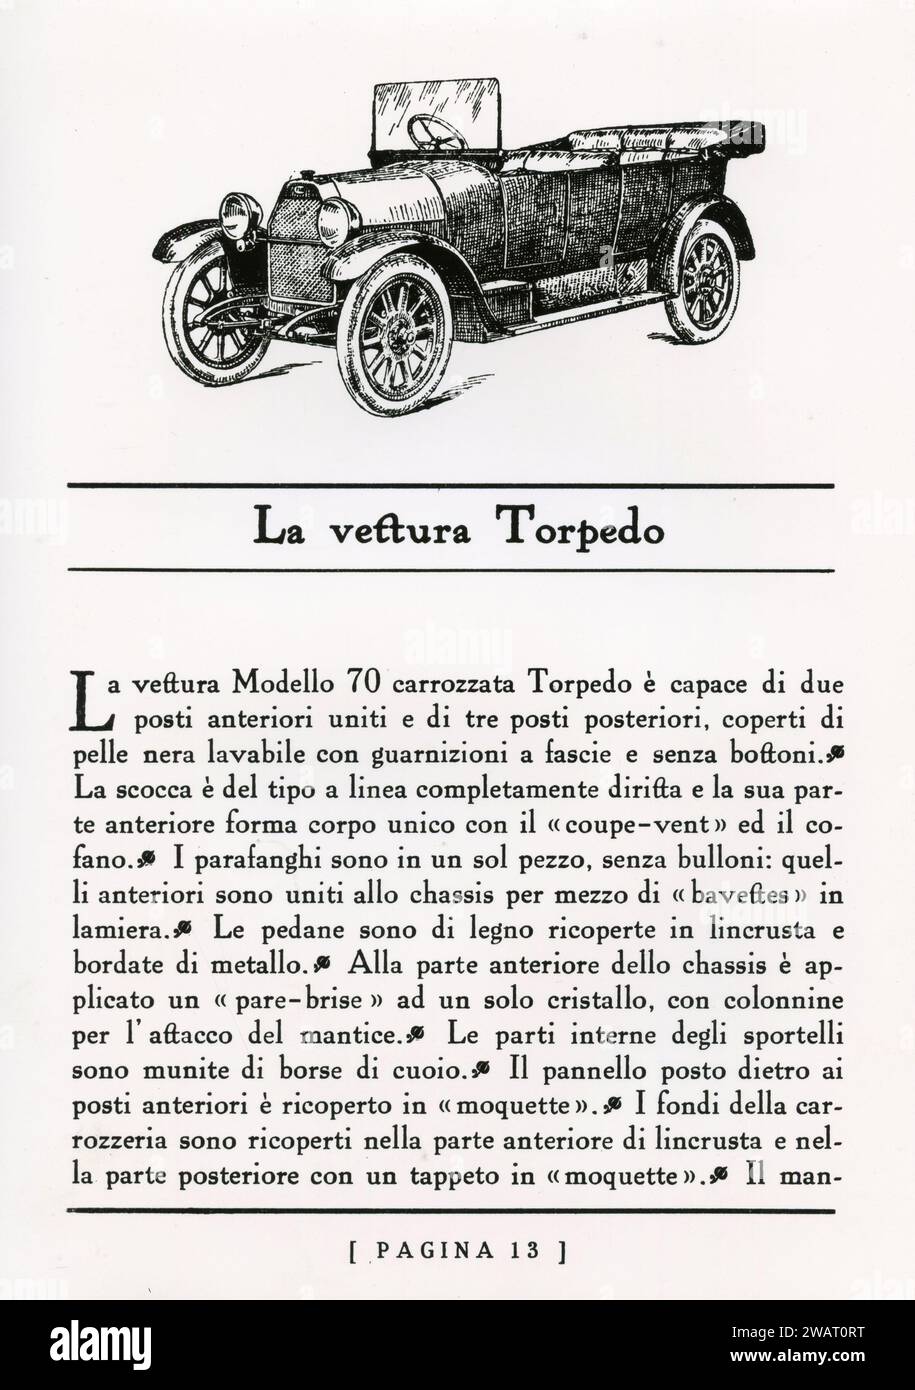 FIAT 70 Torpedo folleto de coches, Italia años 1920 Foto de stock